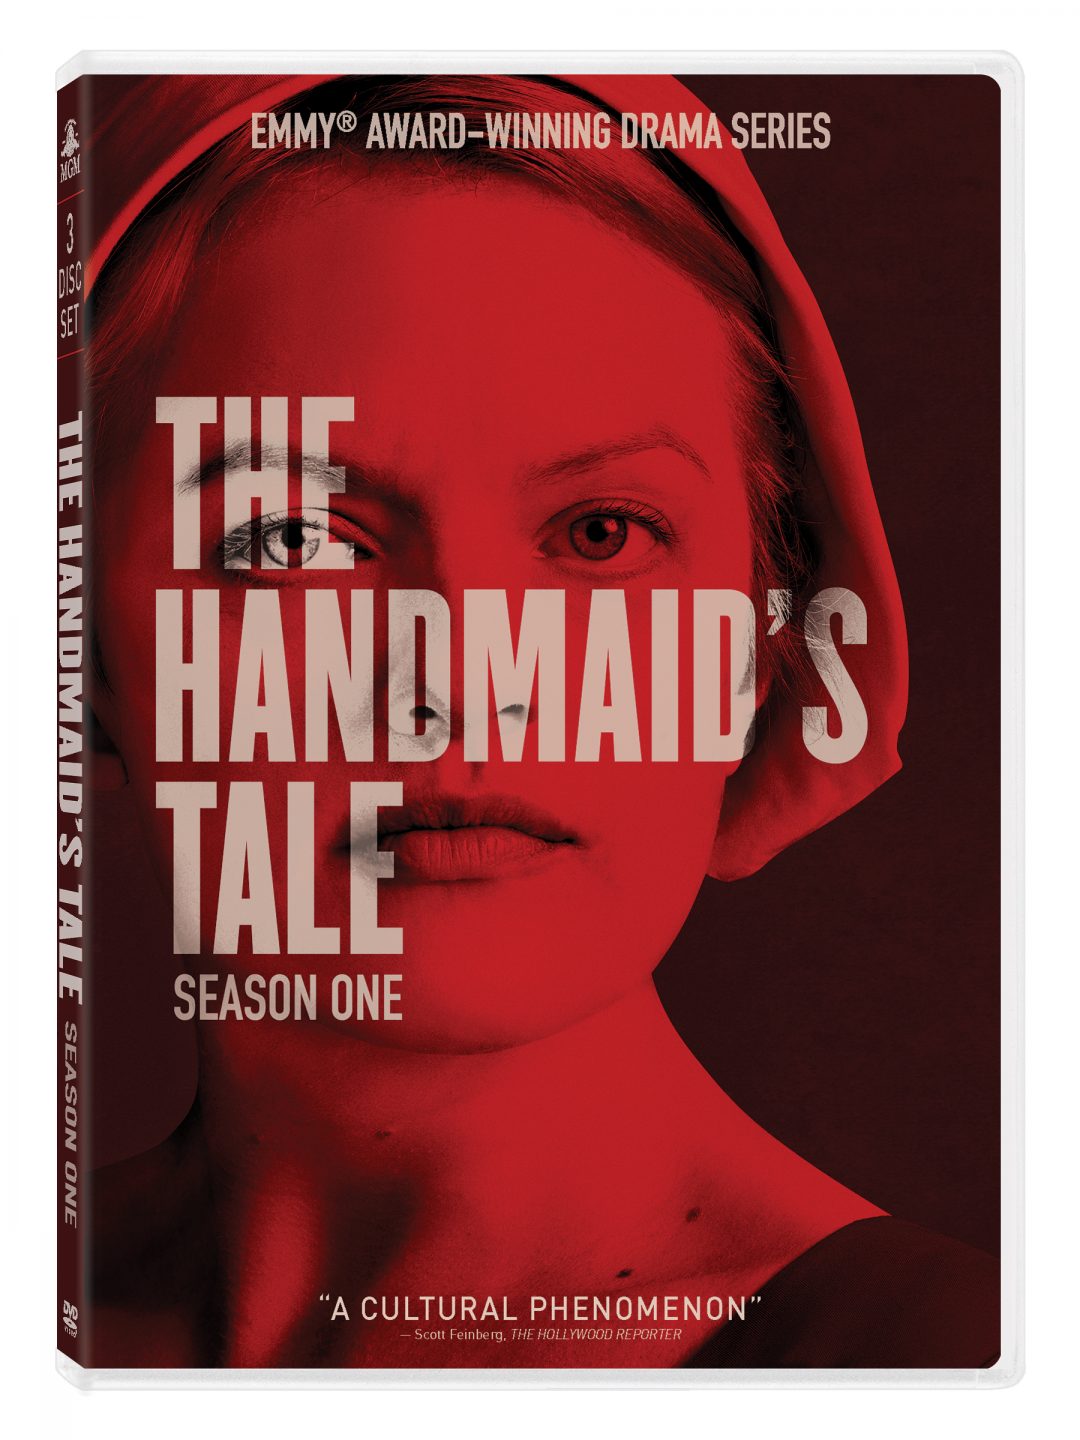 The Handmaid's Tale Season One DVD cover (20th Century Fox Home Entertainment/MGM)